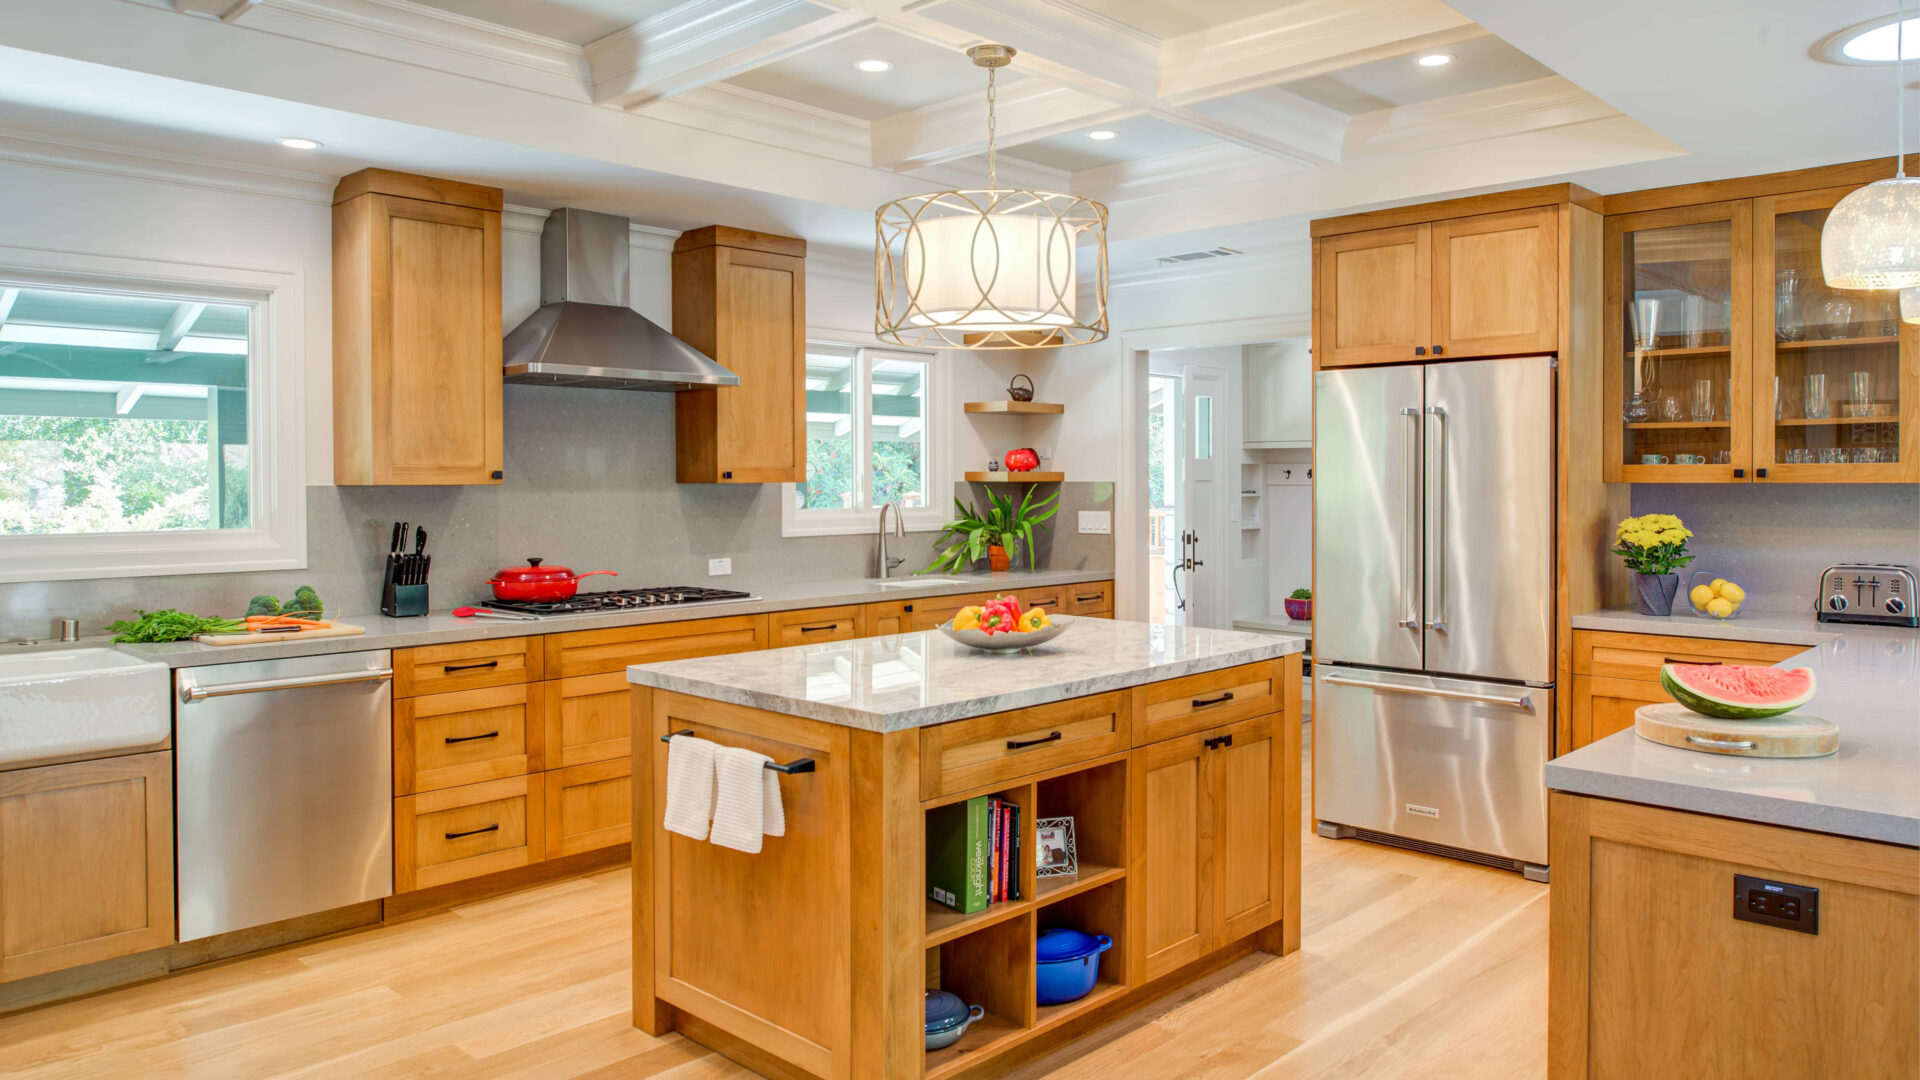 Warm inviting kitchen with farm style sink, alder wood cabinets, white oak hardwood floors. 